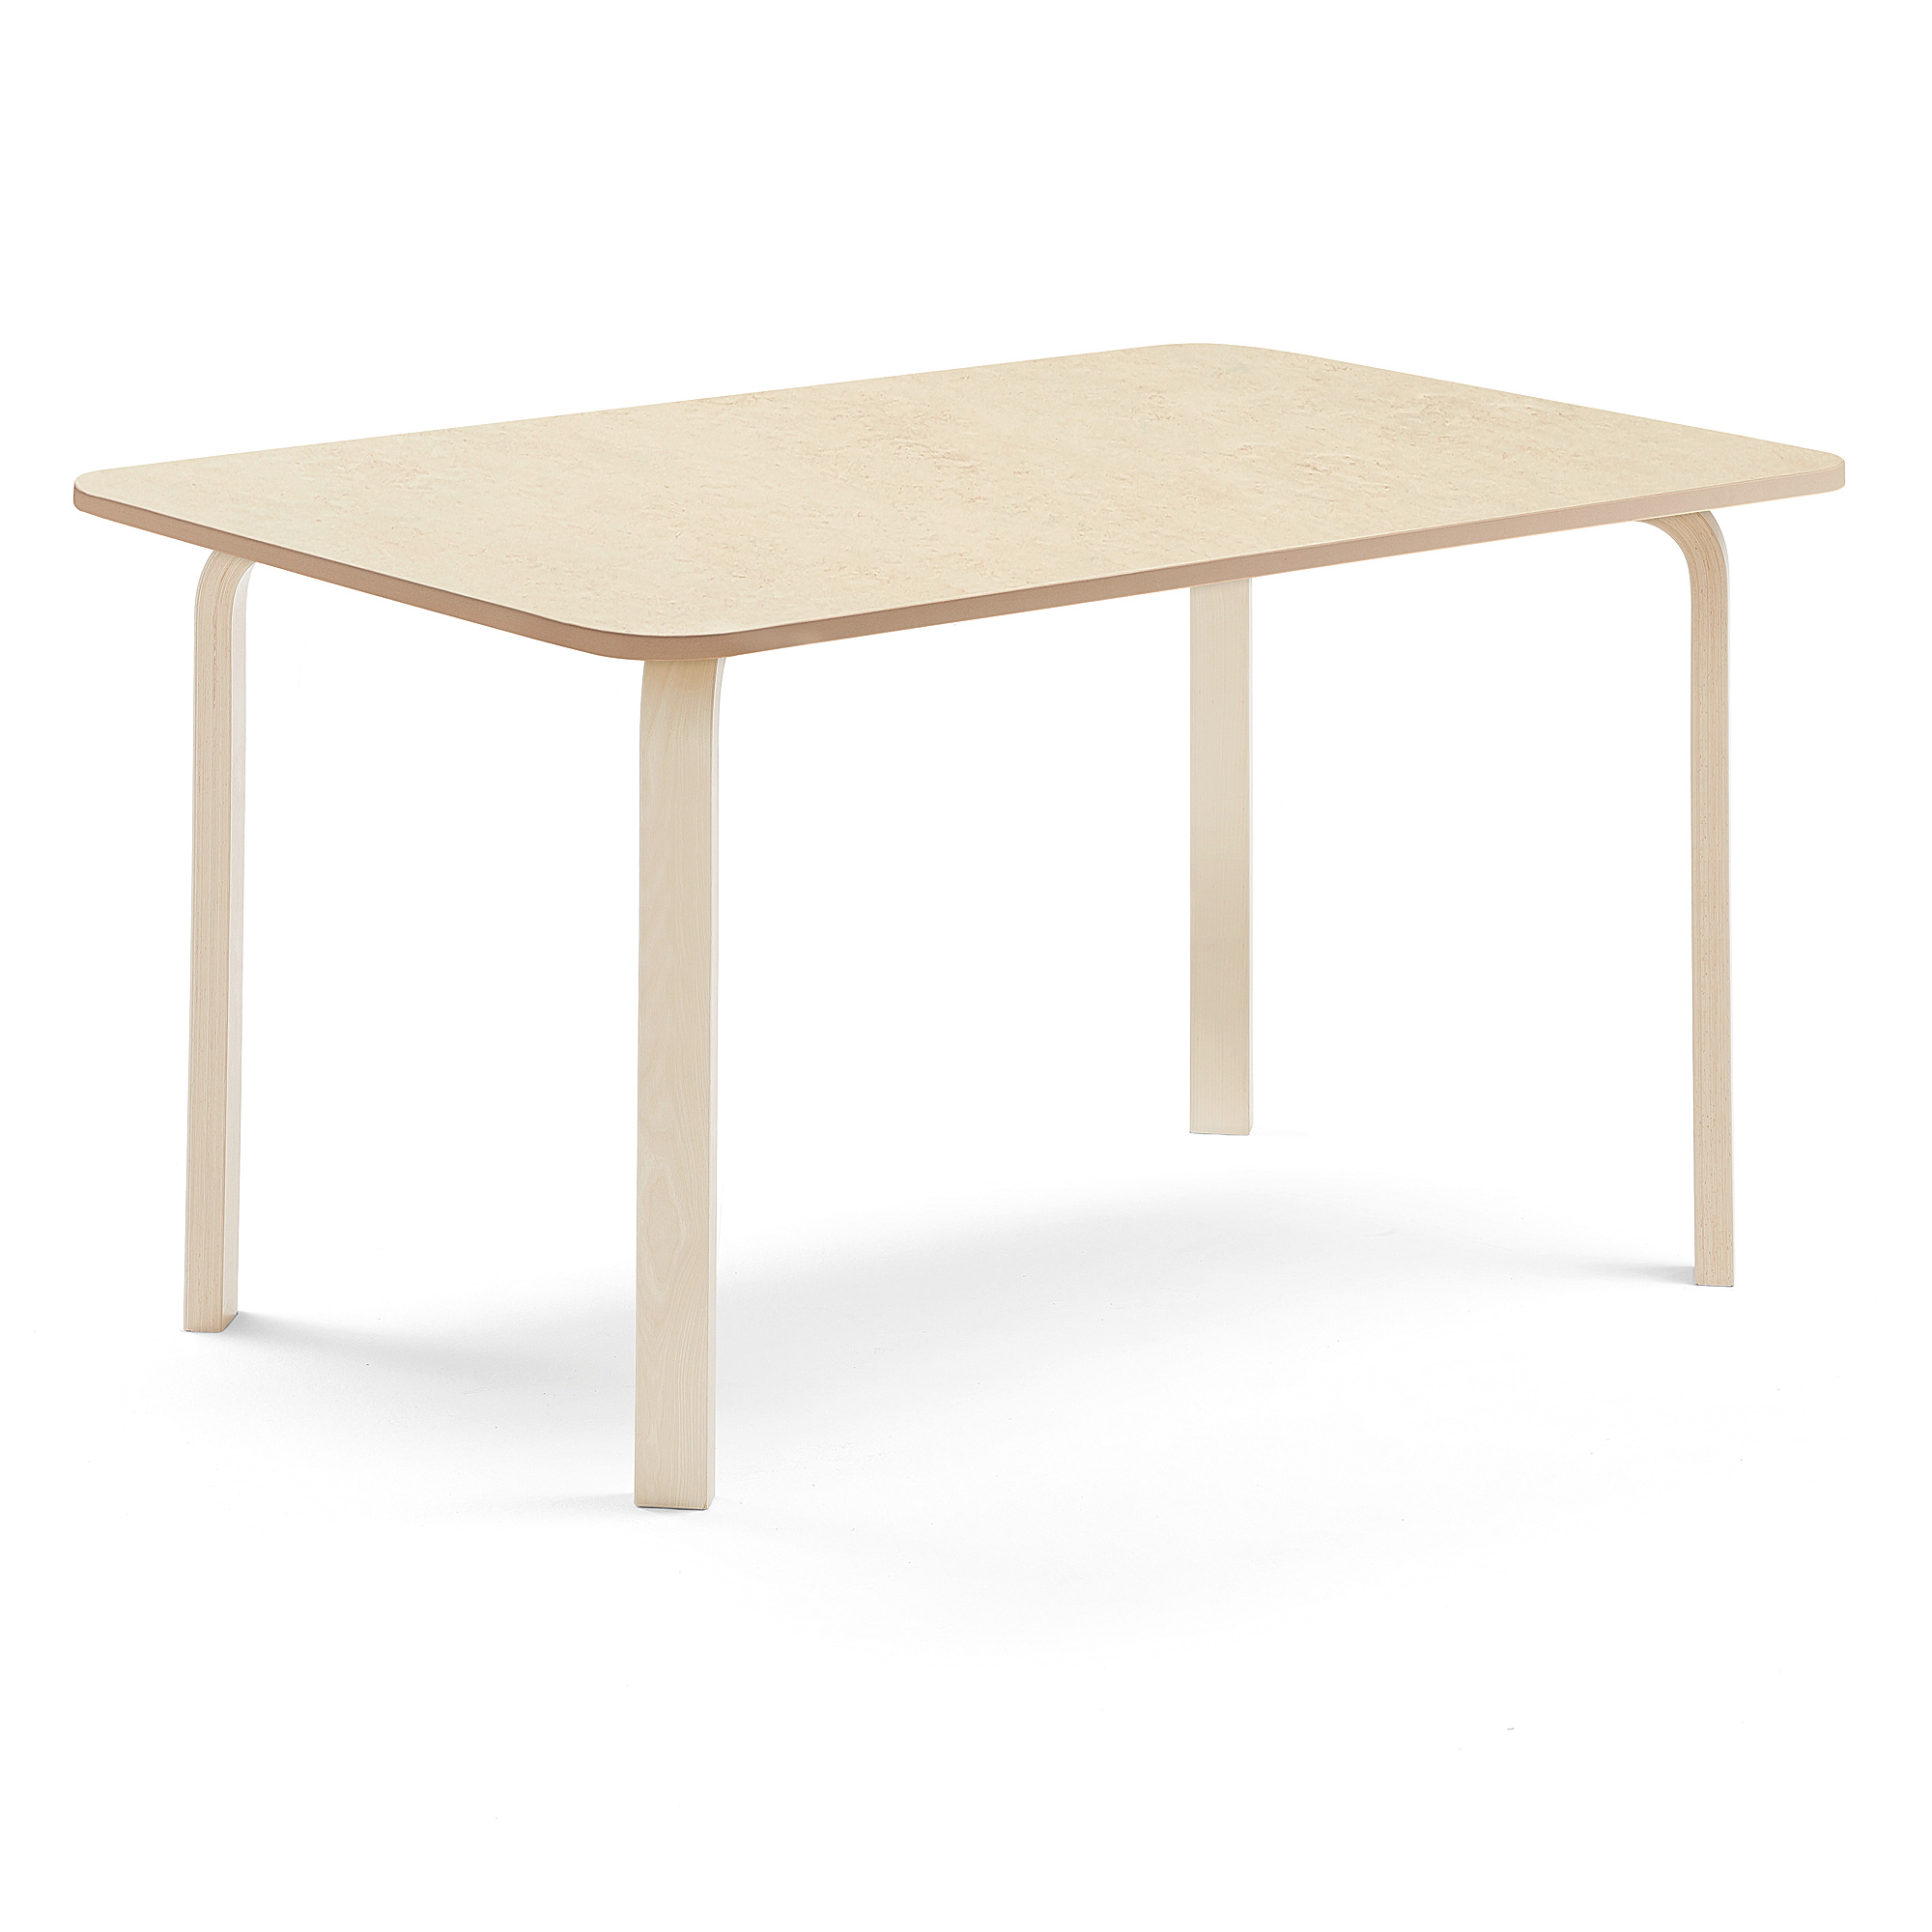 Stůl ELTON, 1800x700x710 mm, bříza, akustické linoleum, béžová